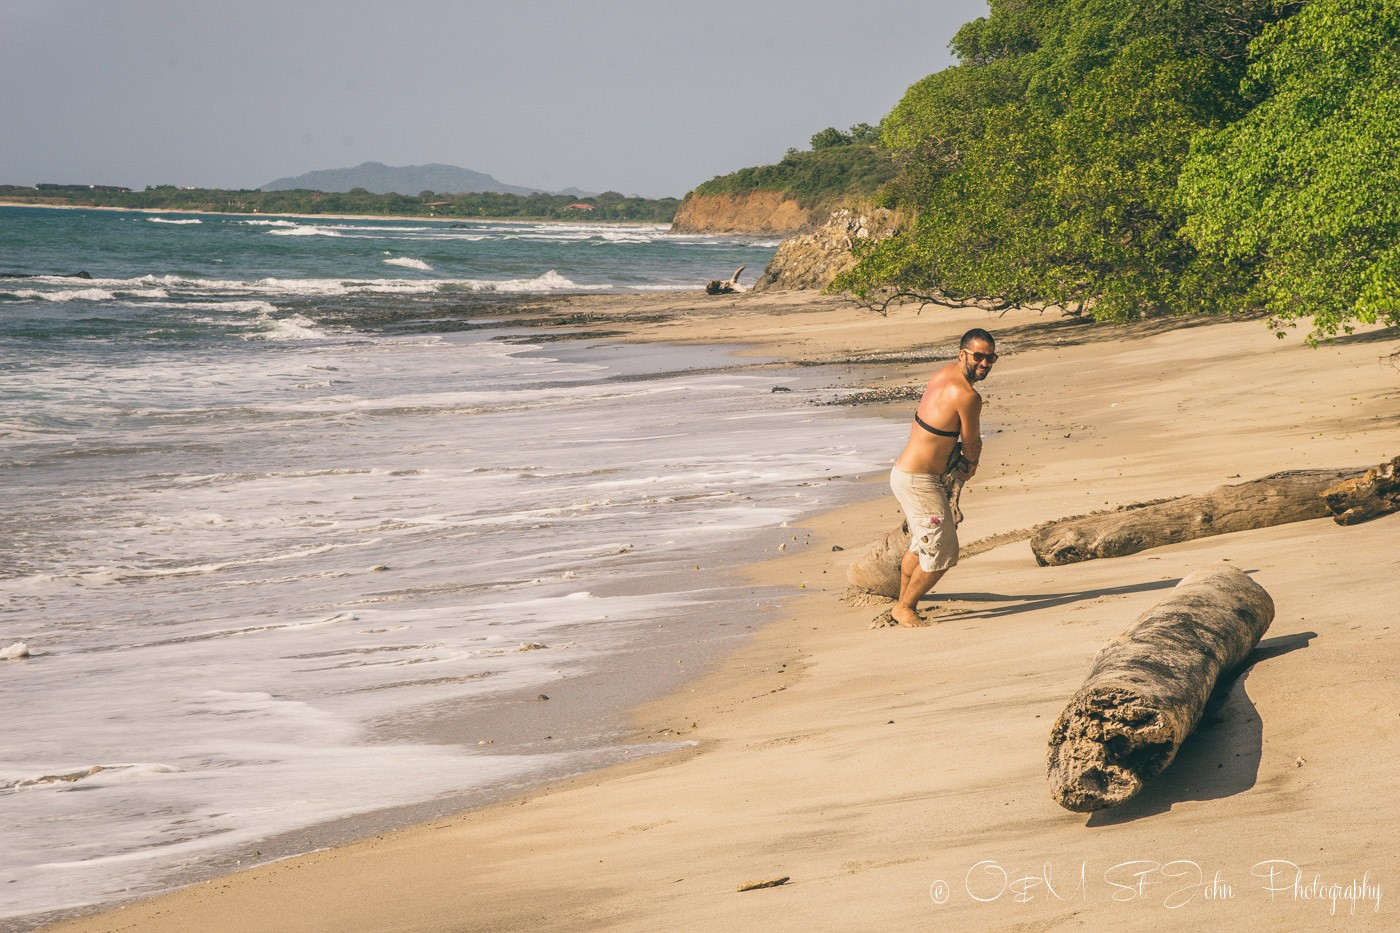 Max hauling driftwood from the beach. Wedding prep. Lagartillo, Costa Rica